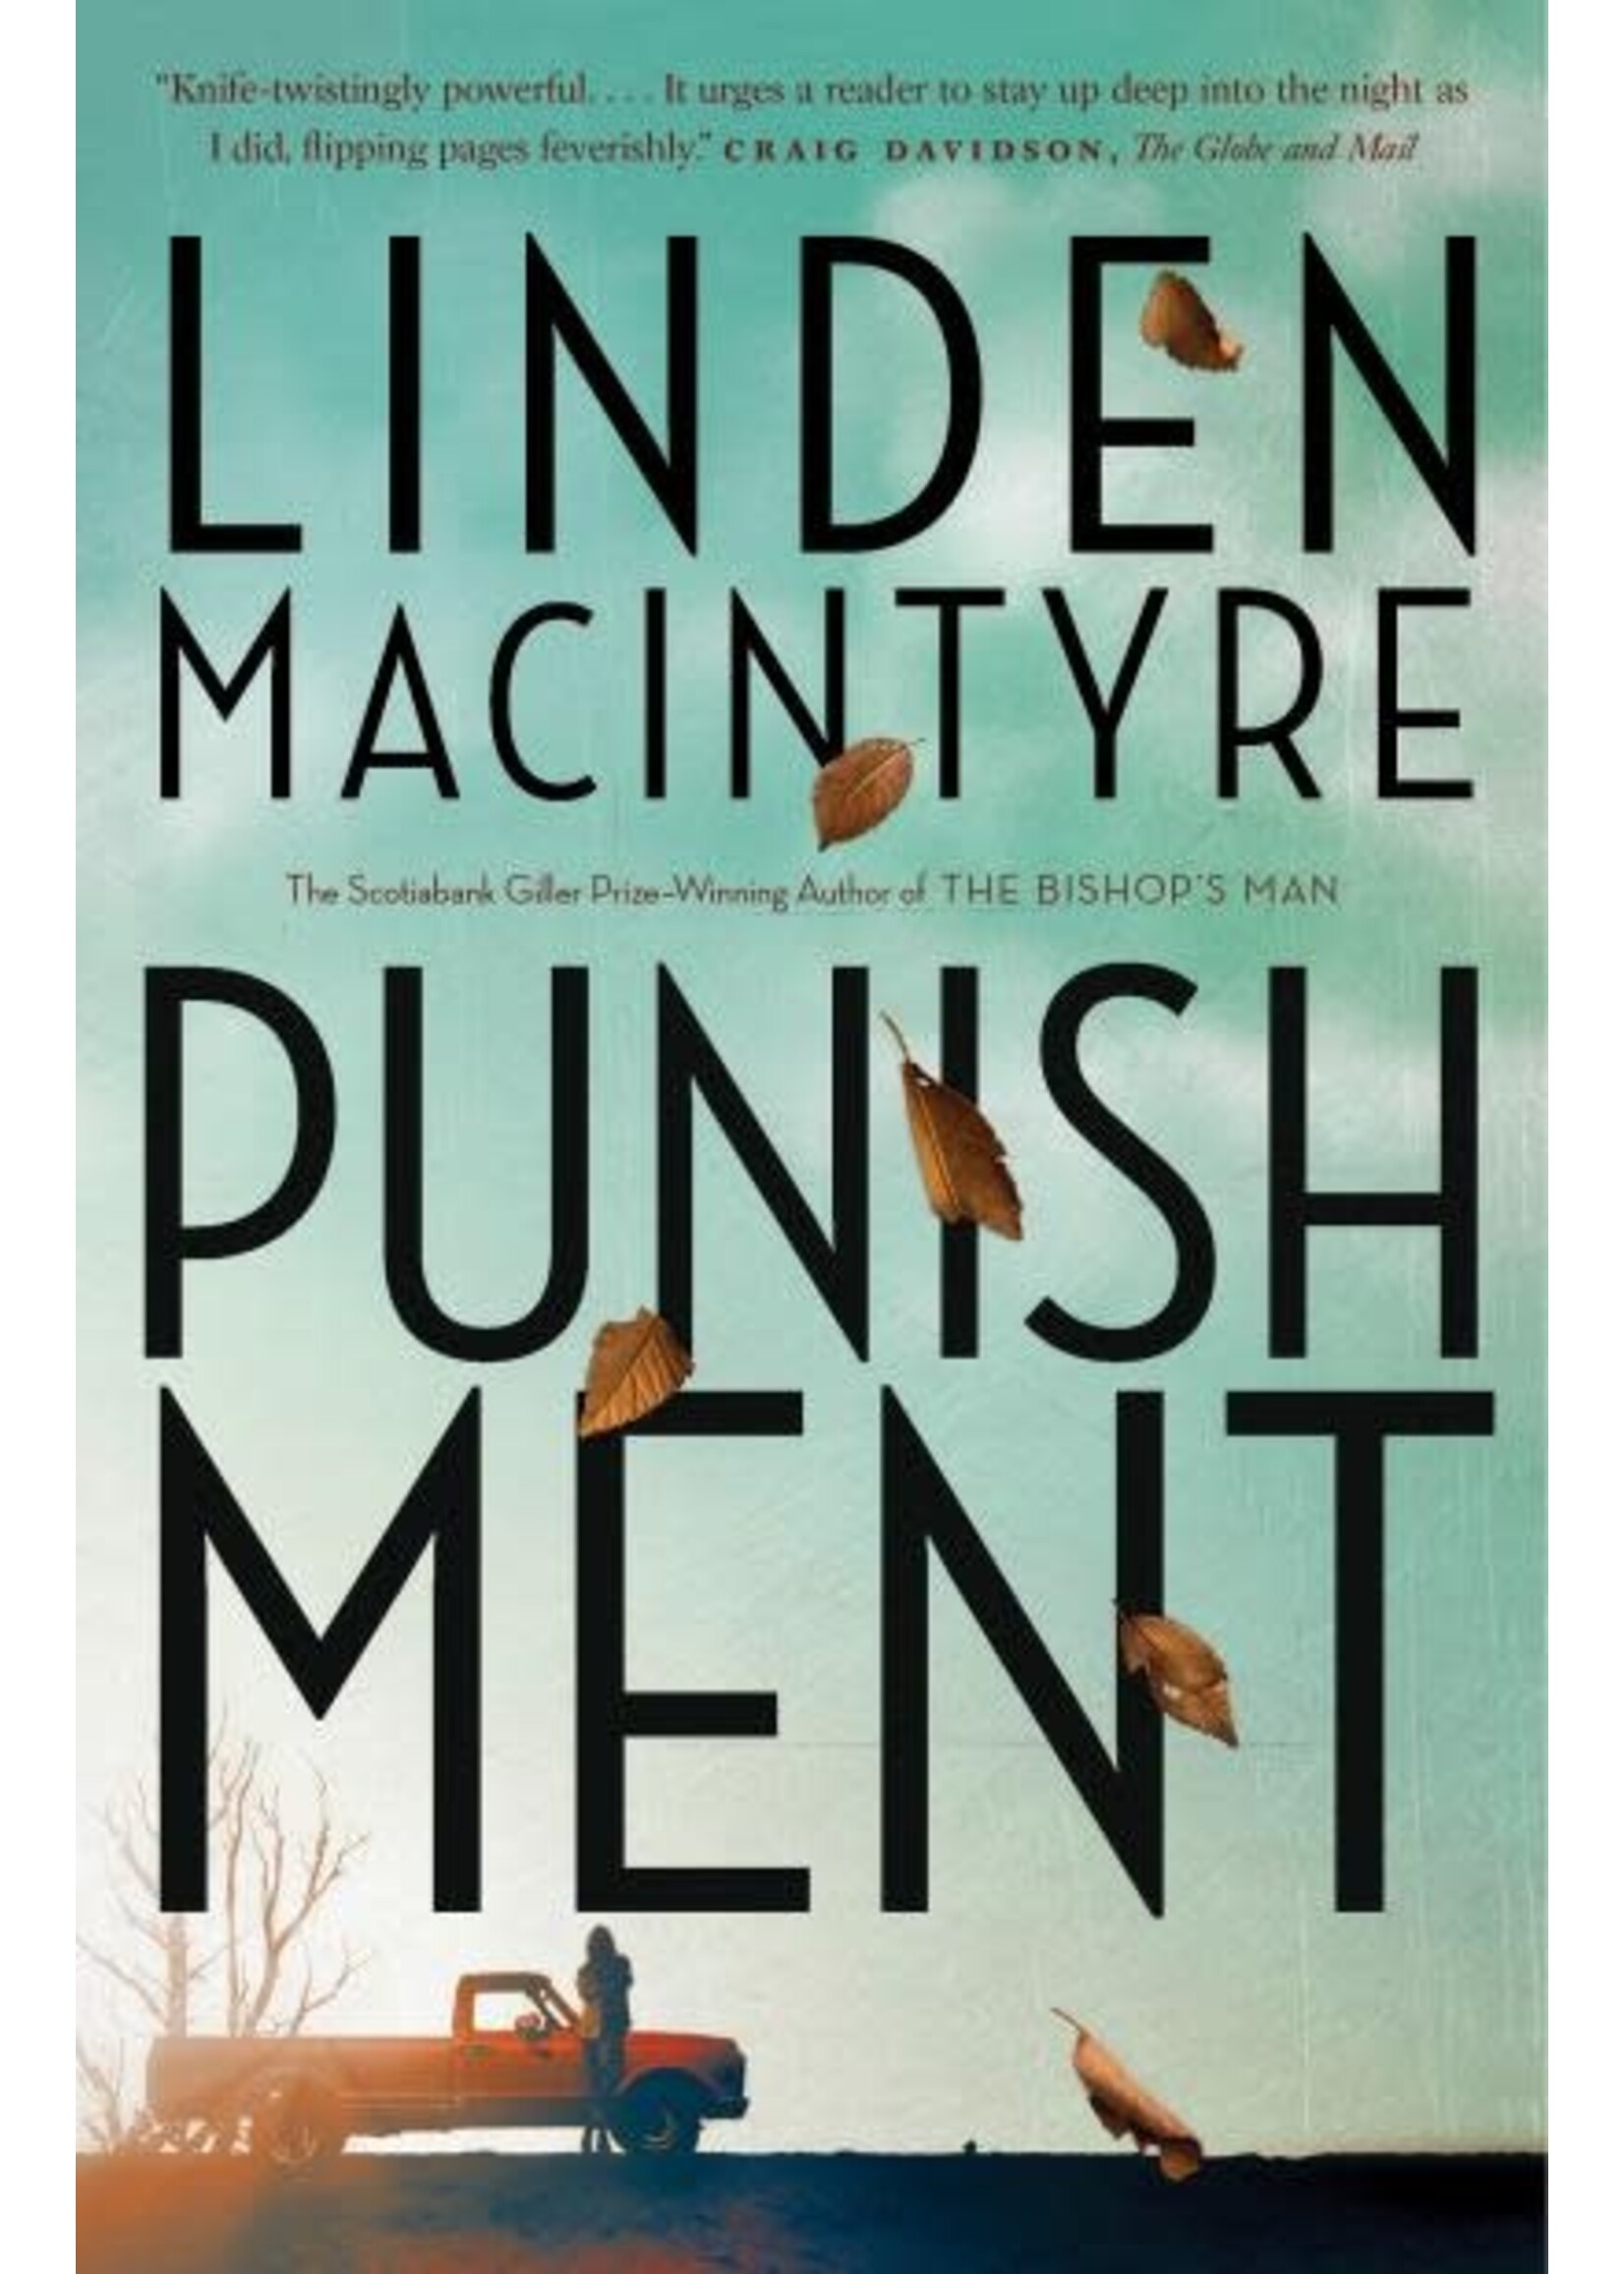 Punishment by Linden MacIntyre